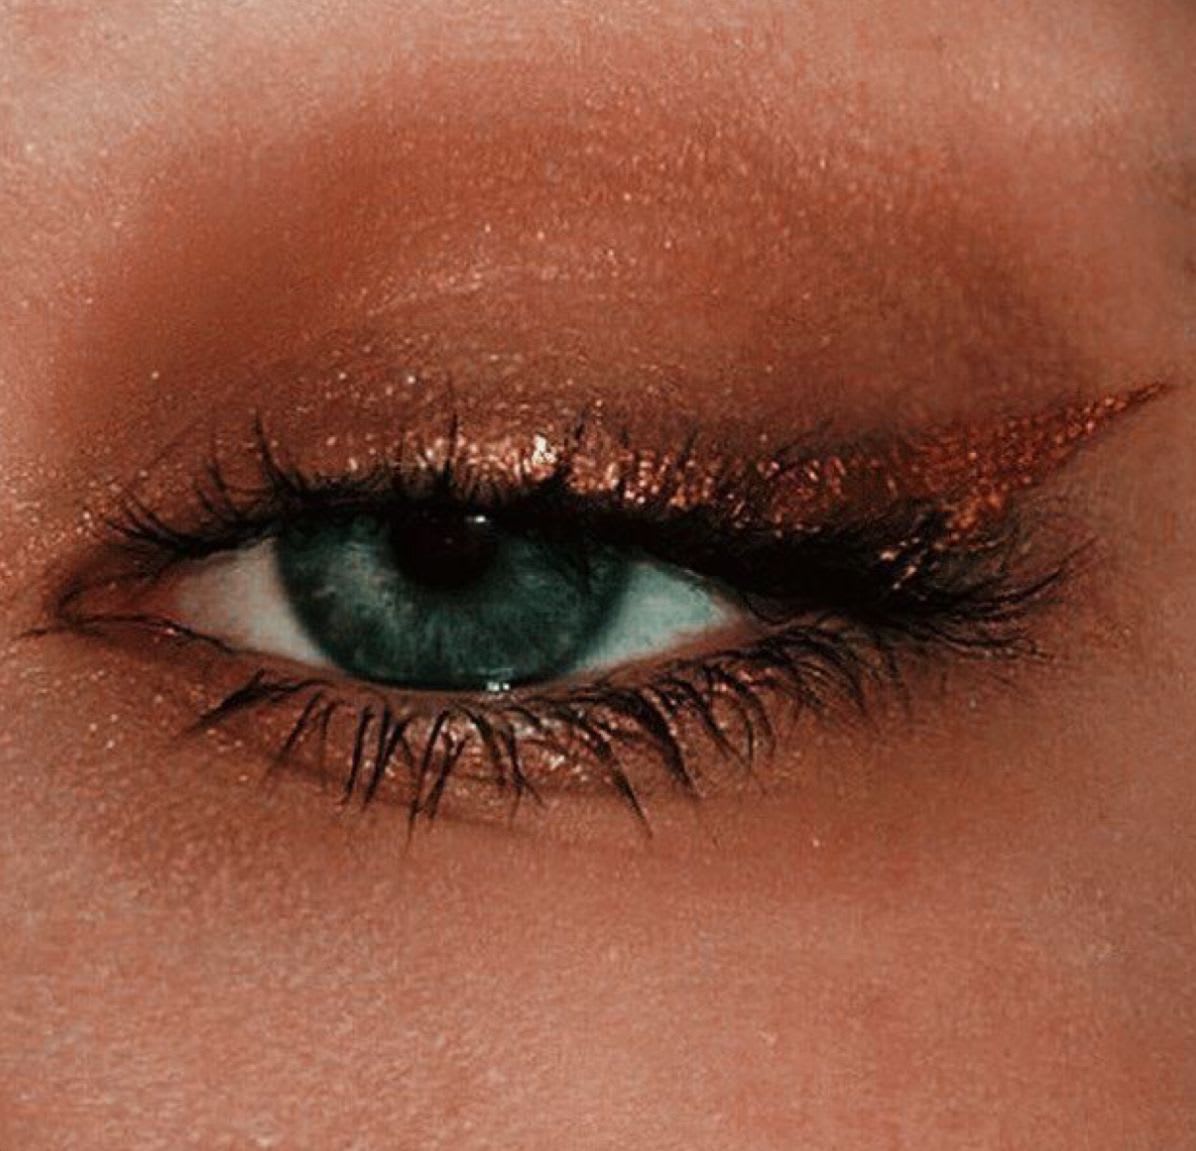 Pin de 𝔯𝔞𝔦𝔫 𝔡𝔯𝔬𝔭𝔰 em eyesight | Delineador dourado, Maquilhagem para olhos, Sombra laranja